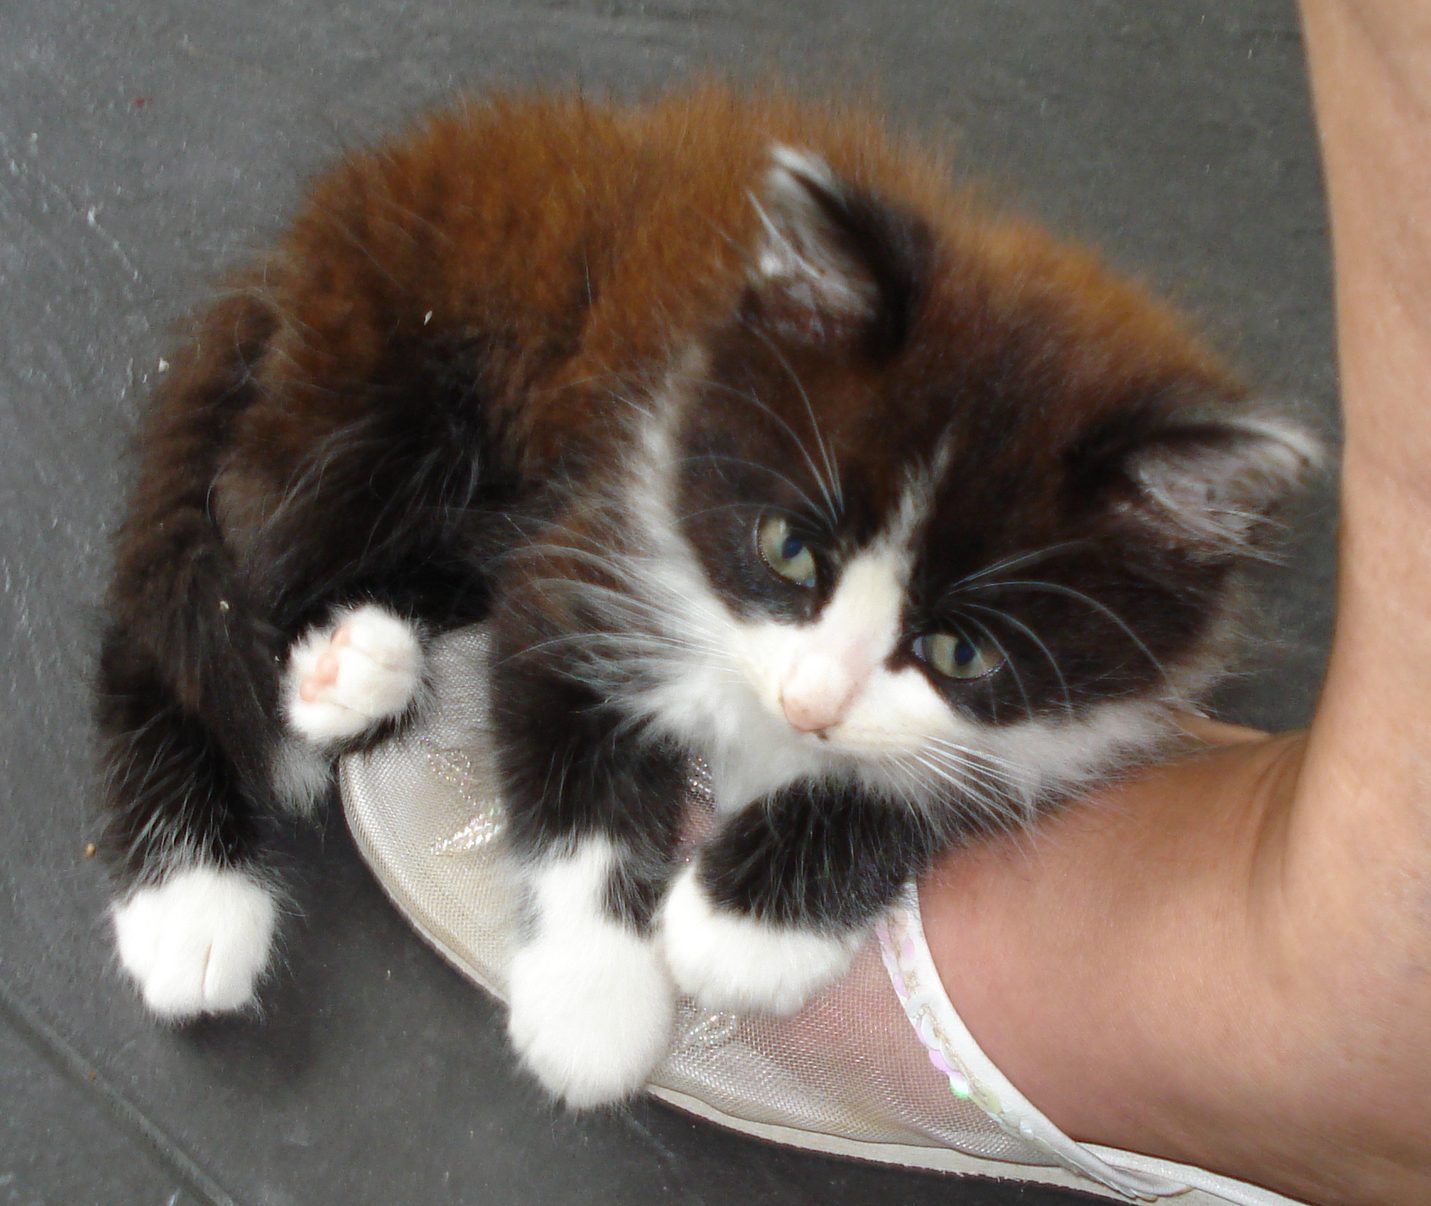 the kitten has fallen off of its mother's shoe